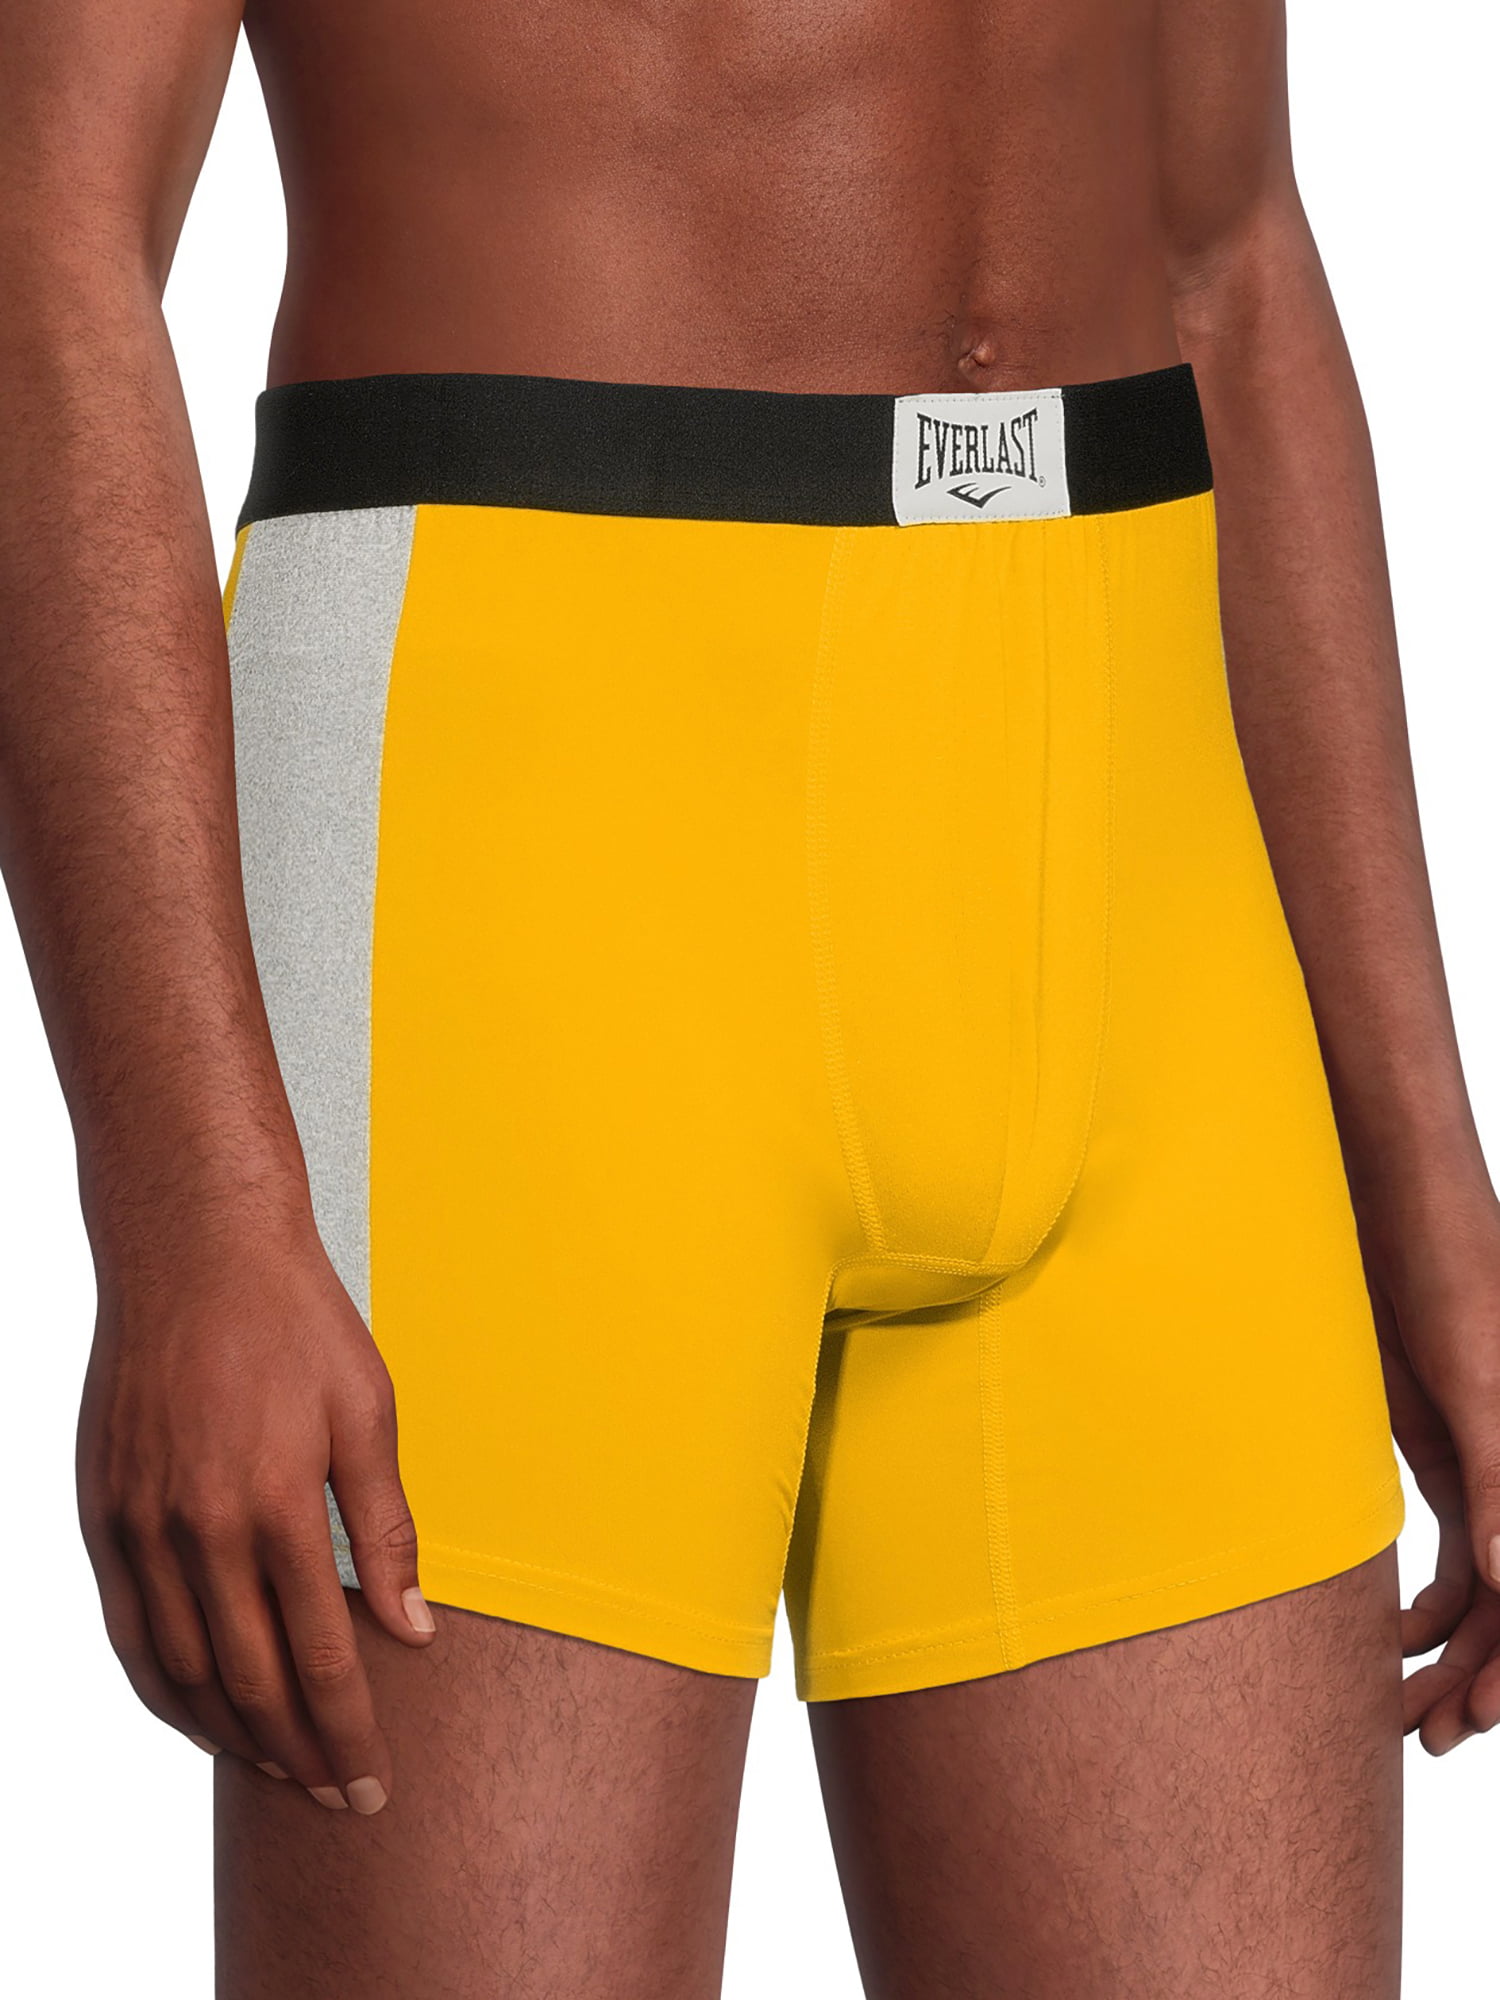 Everlast Men's Trunks Breathable Cotton Underwear Boxers for Men